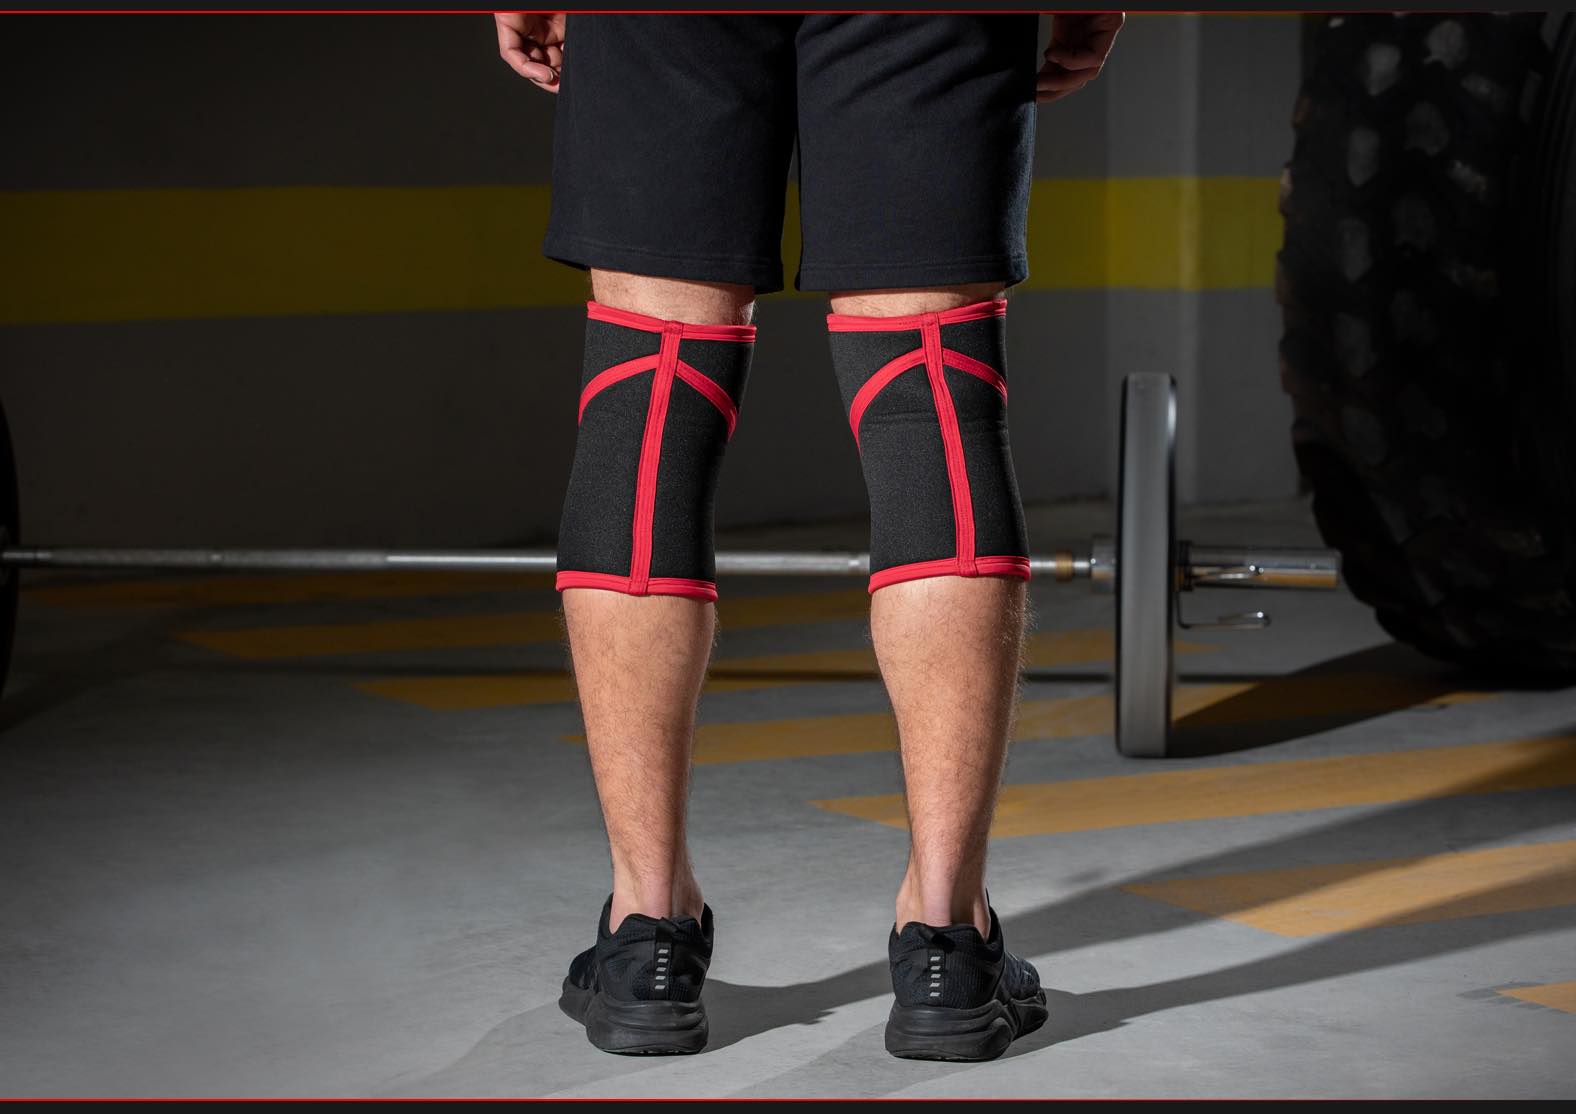 1 Pair Neoprene Knee Sleeves Weightlifting Ambition Fitness Gear Red & Black 